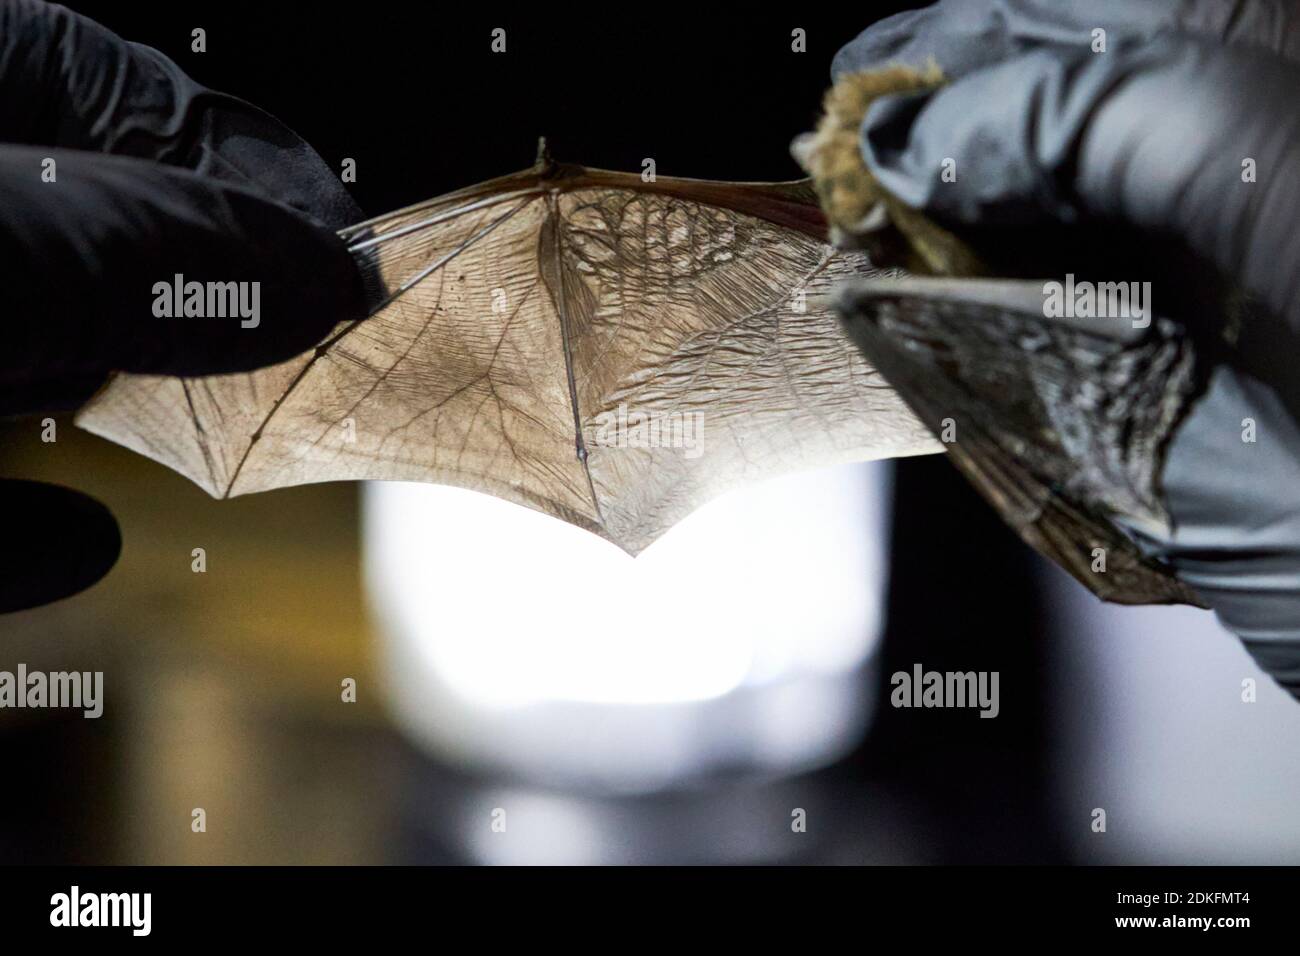 Bat, Rough-skin bat, Pipistrellus nathusii, wings, research Stock Photo